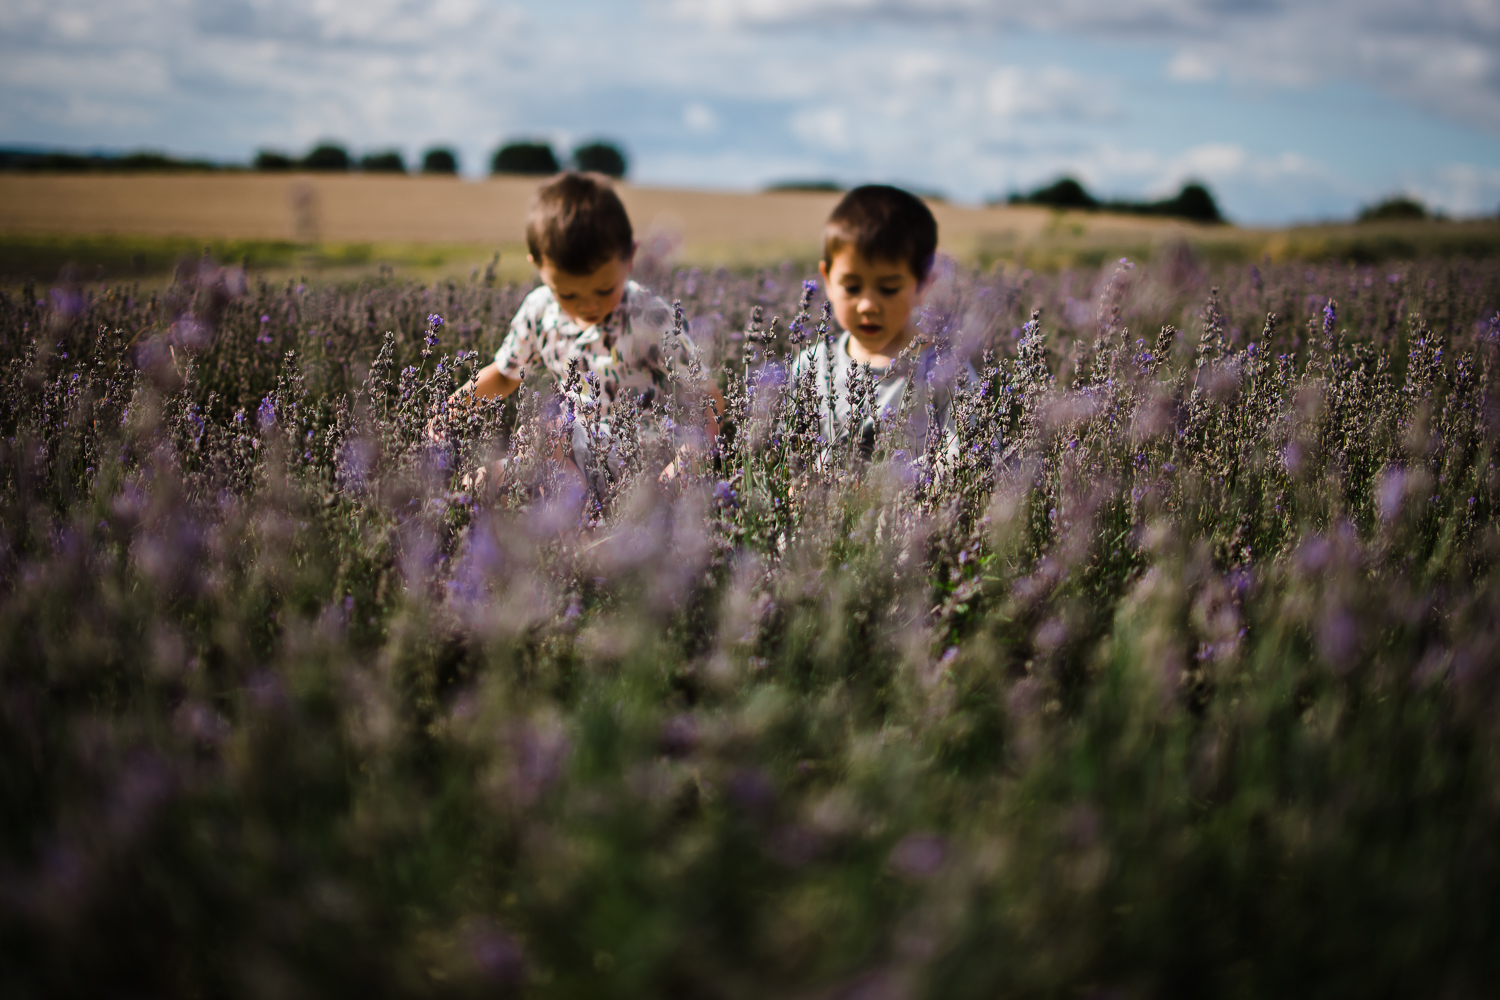 Children portrait photography at the lavender farm, Hertfordshire